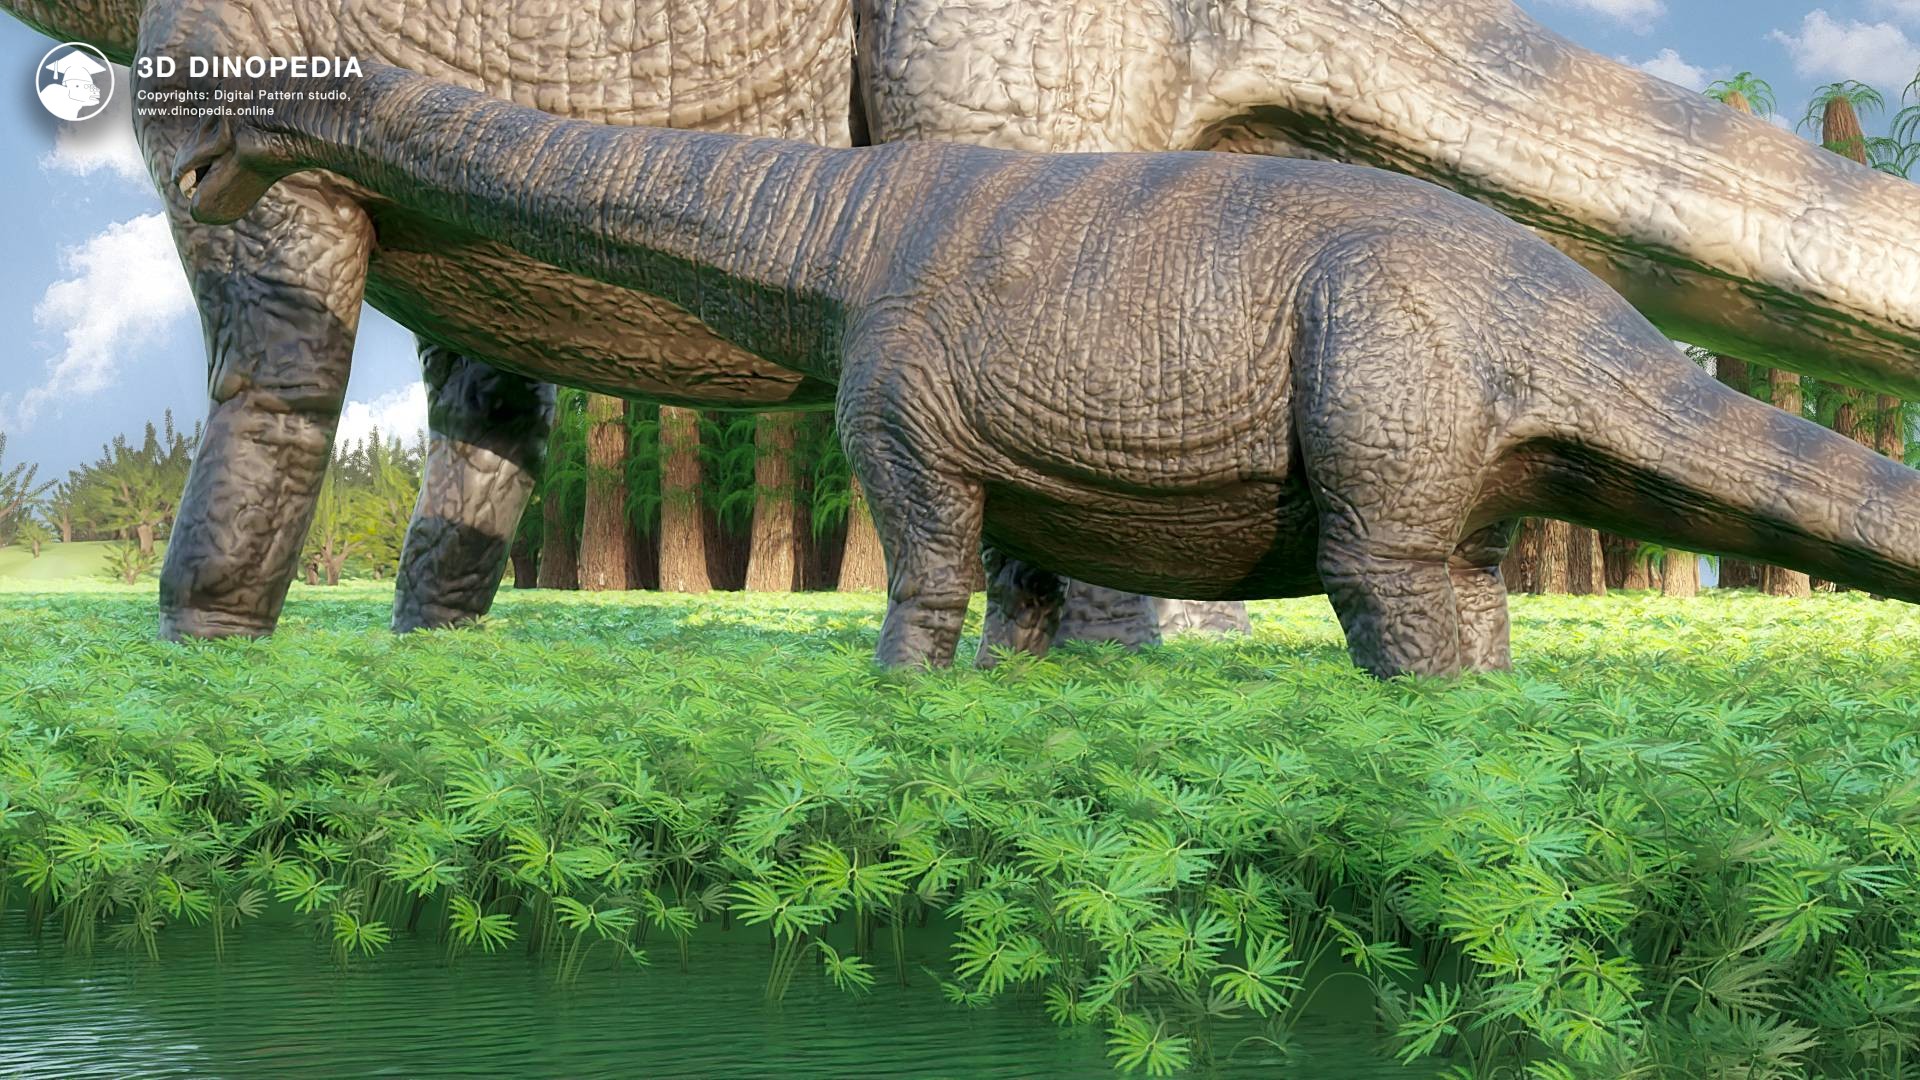 3D Dinopedia Exposing the 'live-bearing sauropods